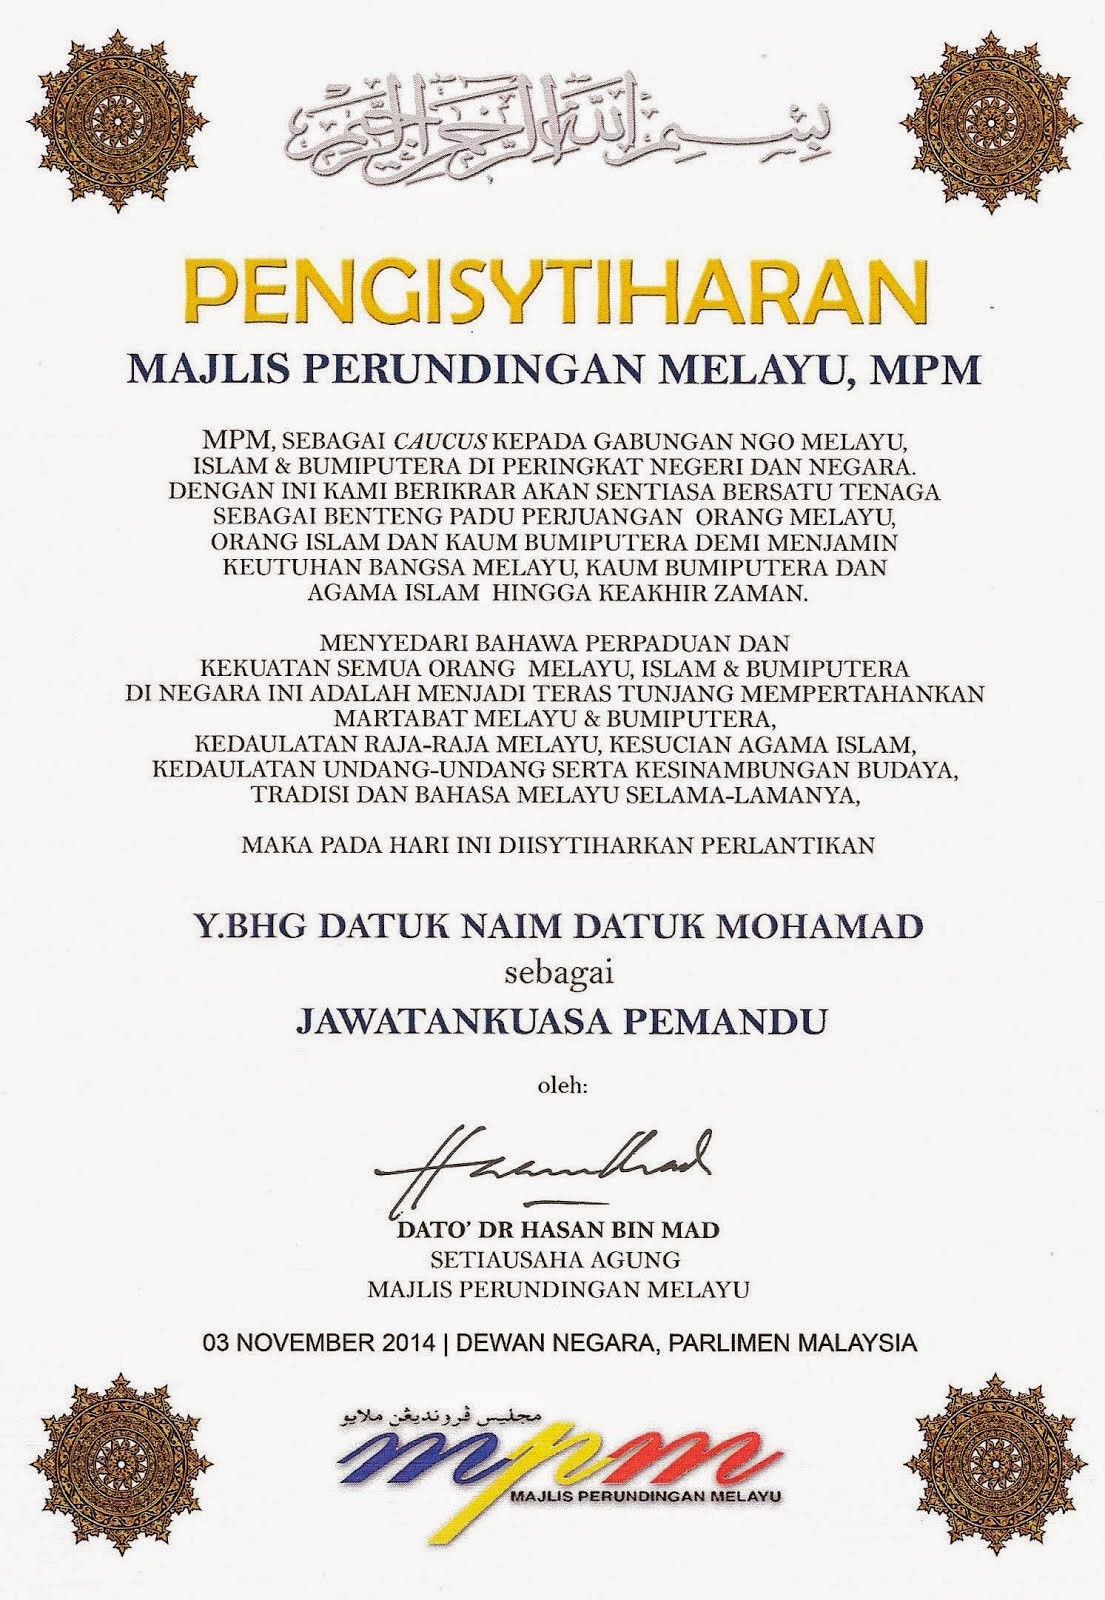 Majlis Perunding Melayu (MPM)